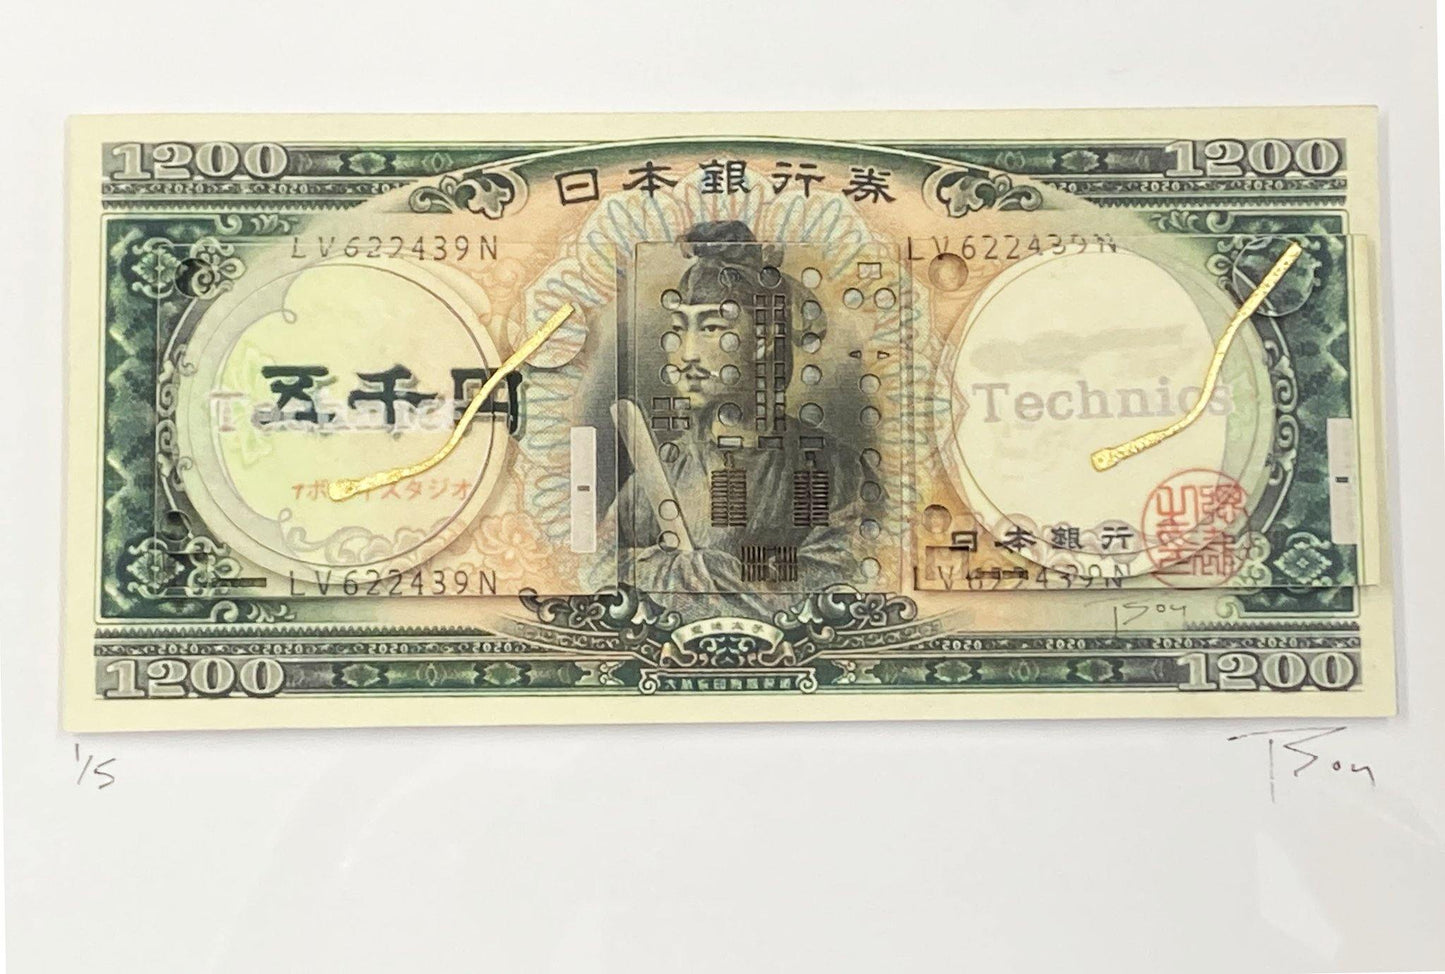 Technics 1200 Yen Bank Note - Smolensky Gallery